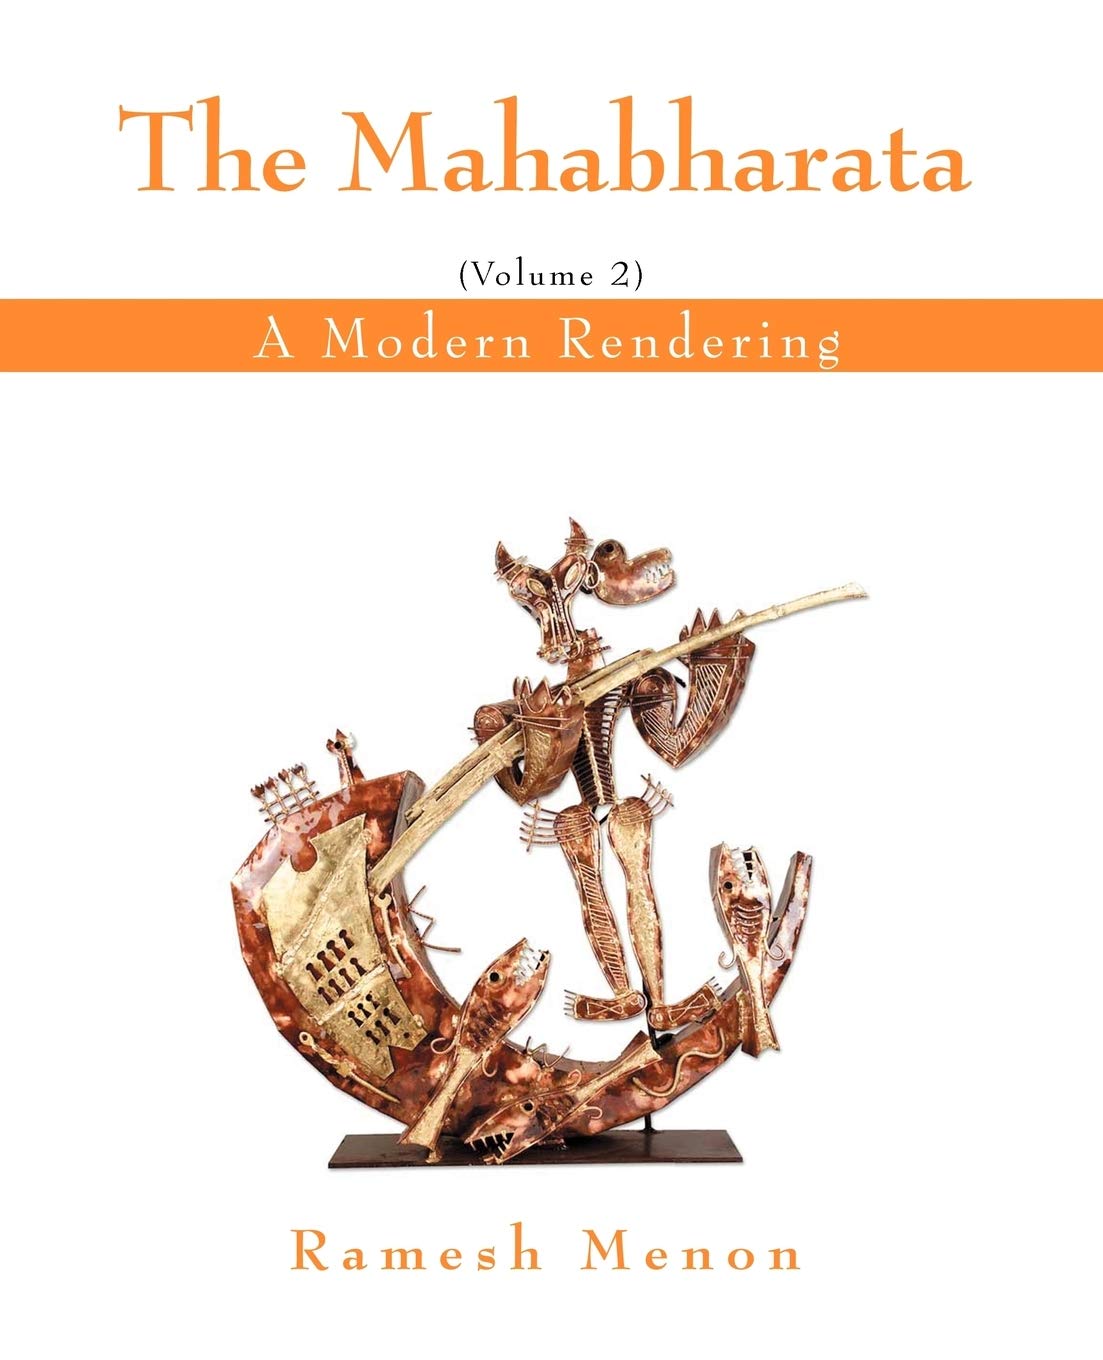 The Mahabharata: A Modern Rendering, Vol. 2